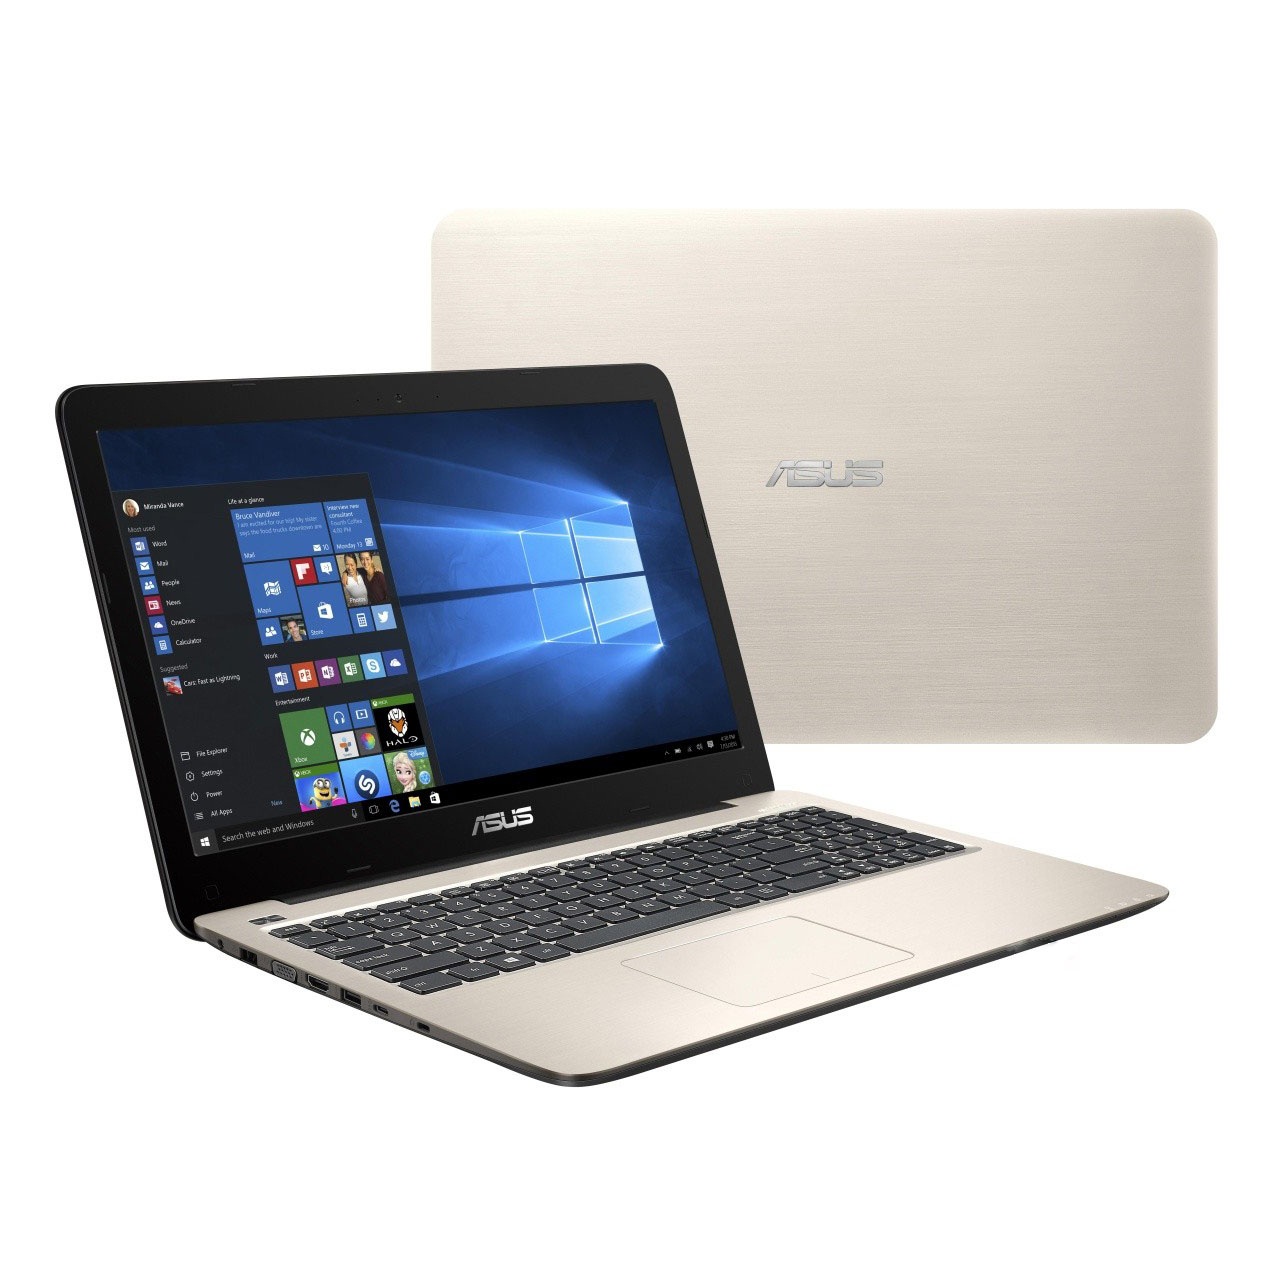 Đặc điểm nổi bật của Laptop Asus A556UR DM397T